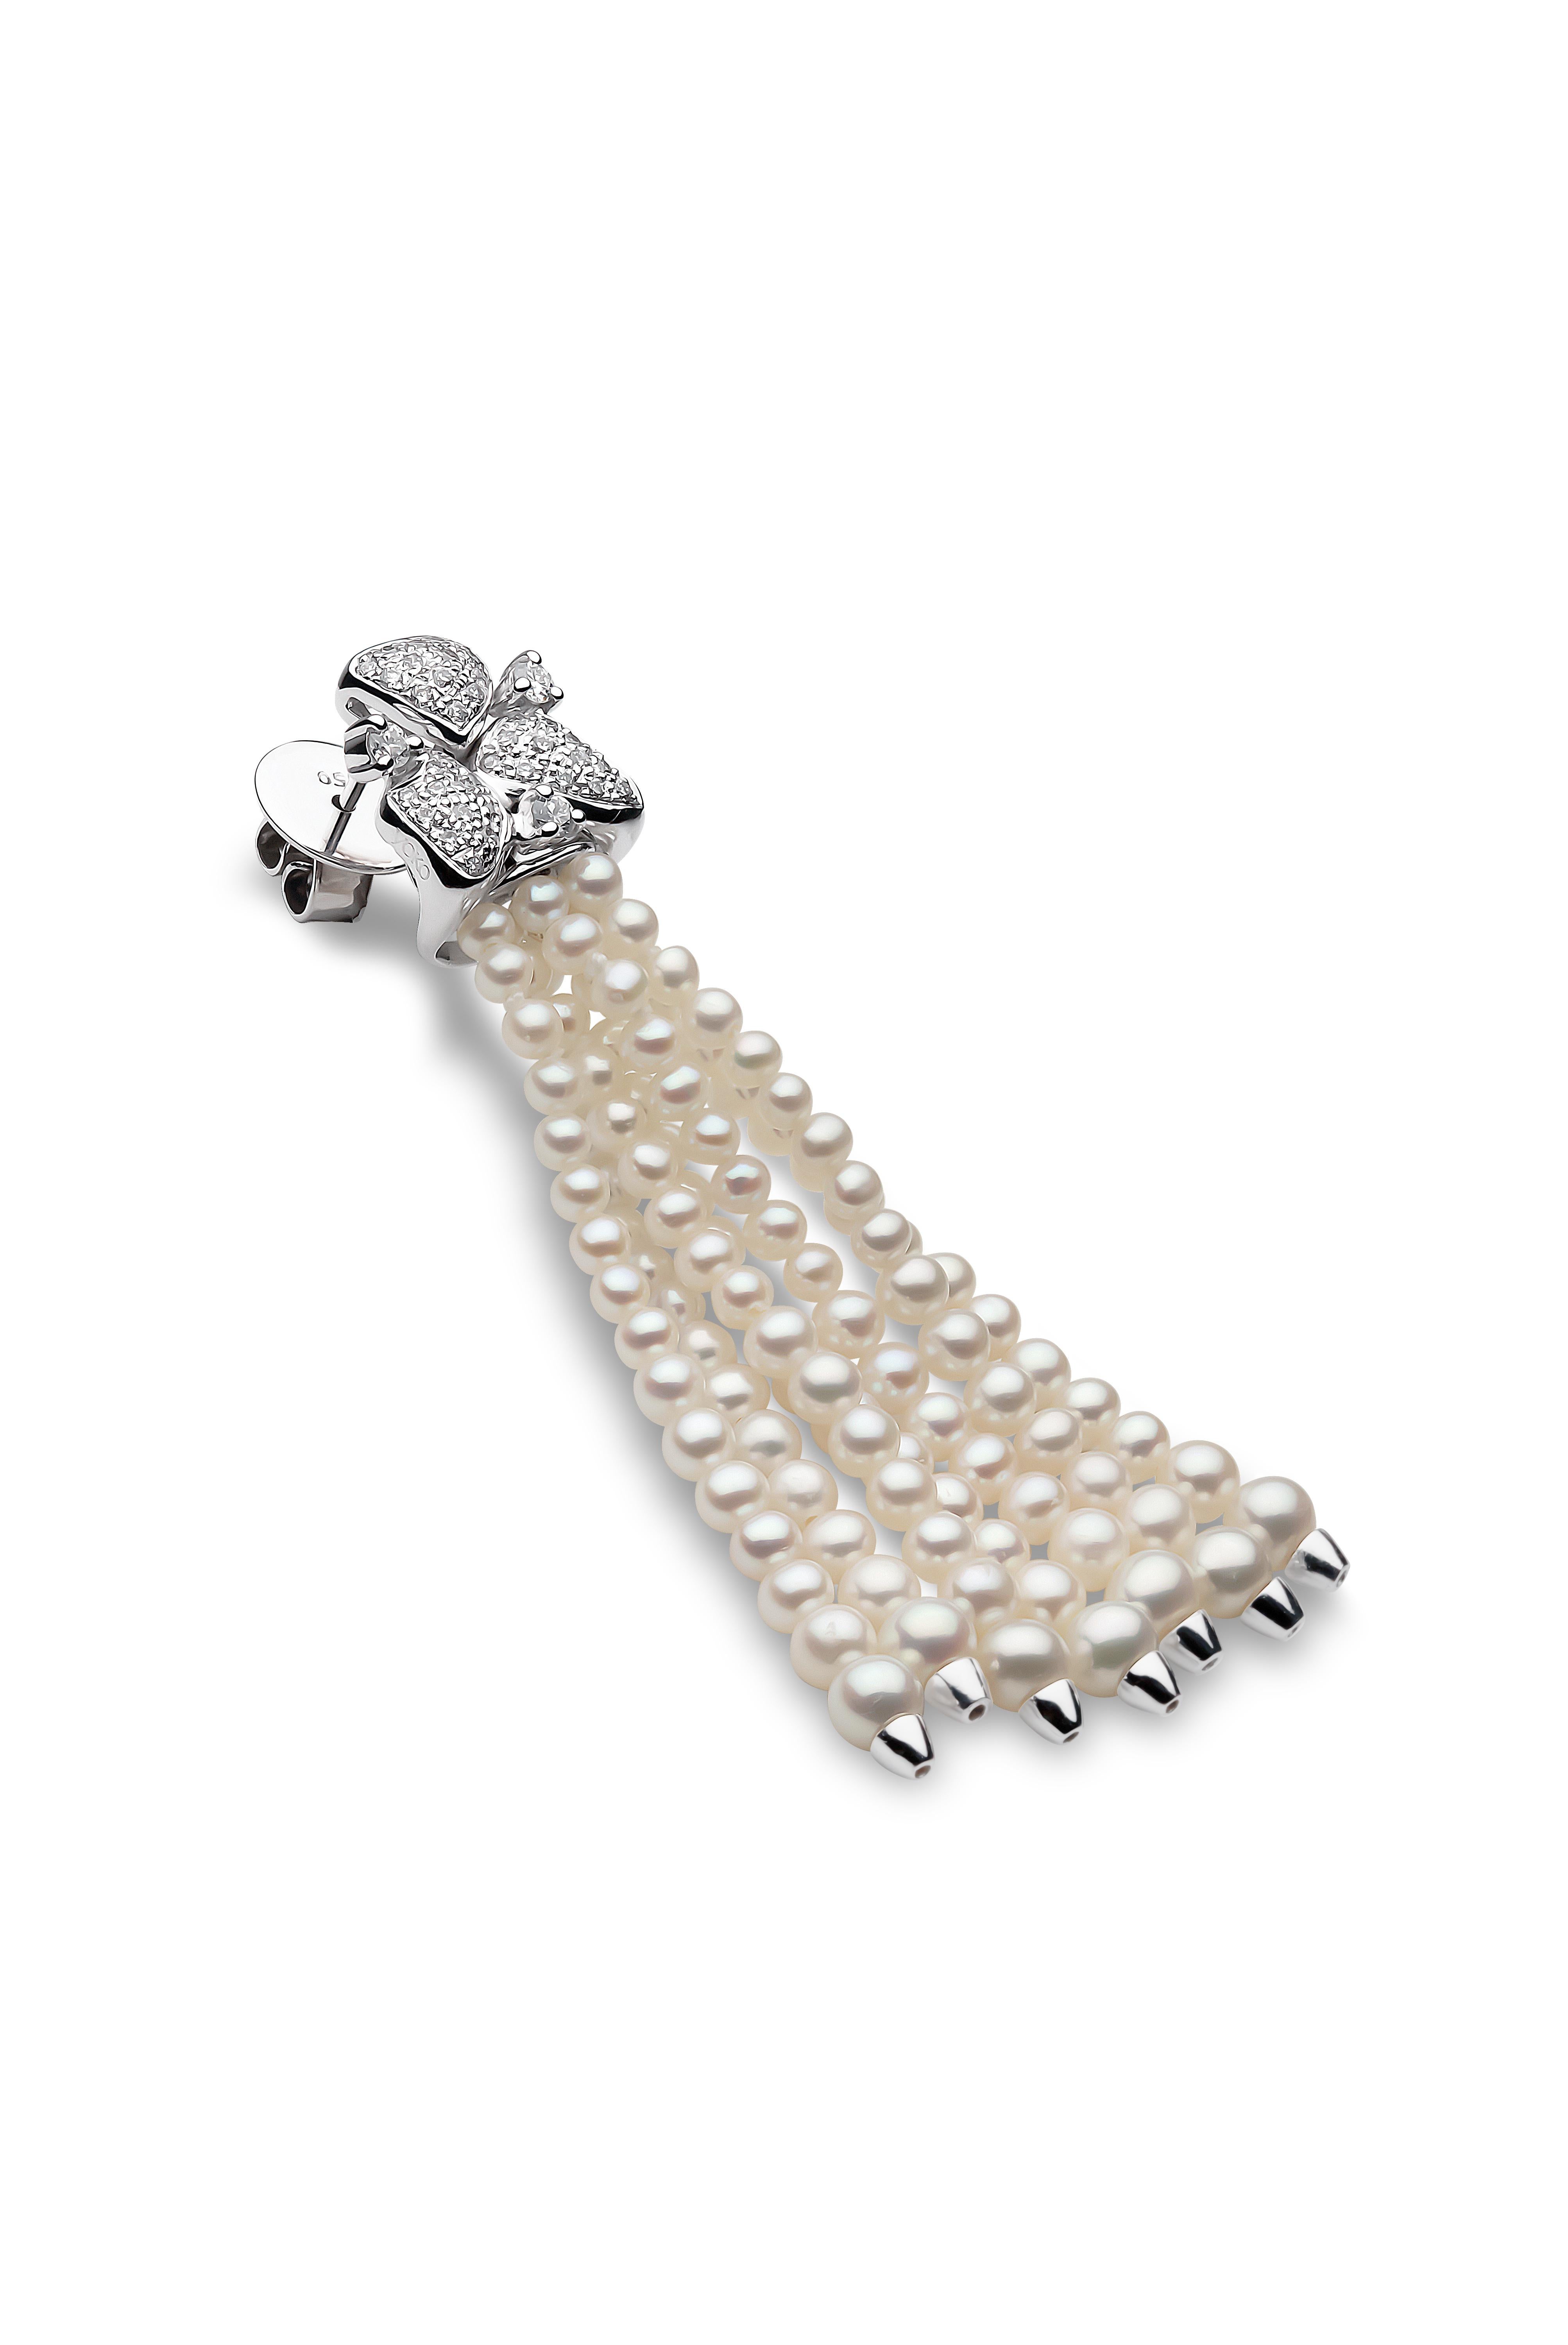 Modern Yoko London Freshwater Pearl and Diamond Tassel Earrings in 18 Karat White Gold For Sale